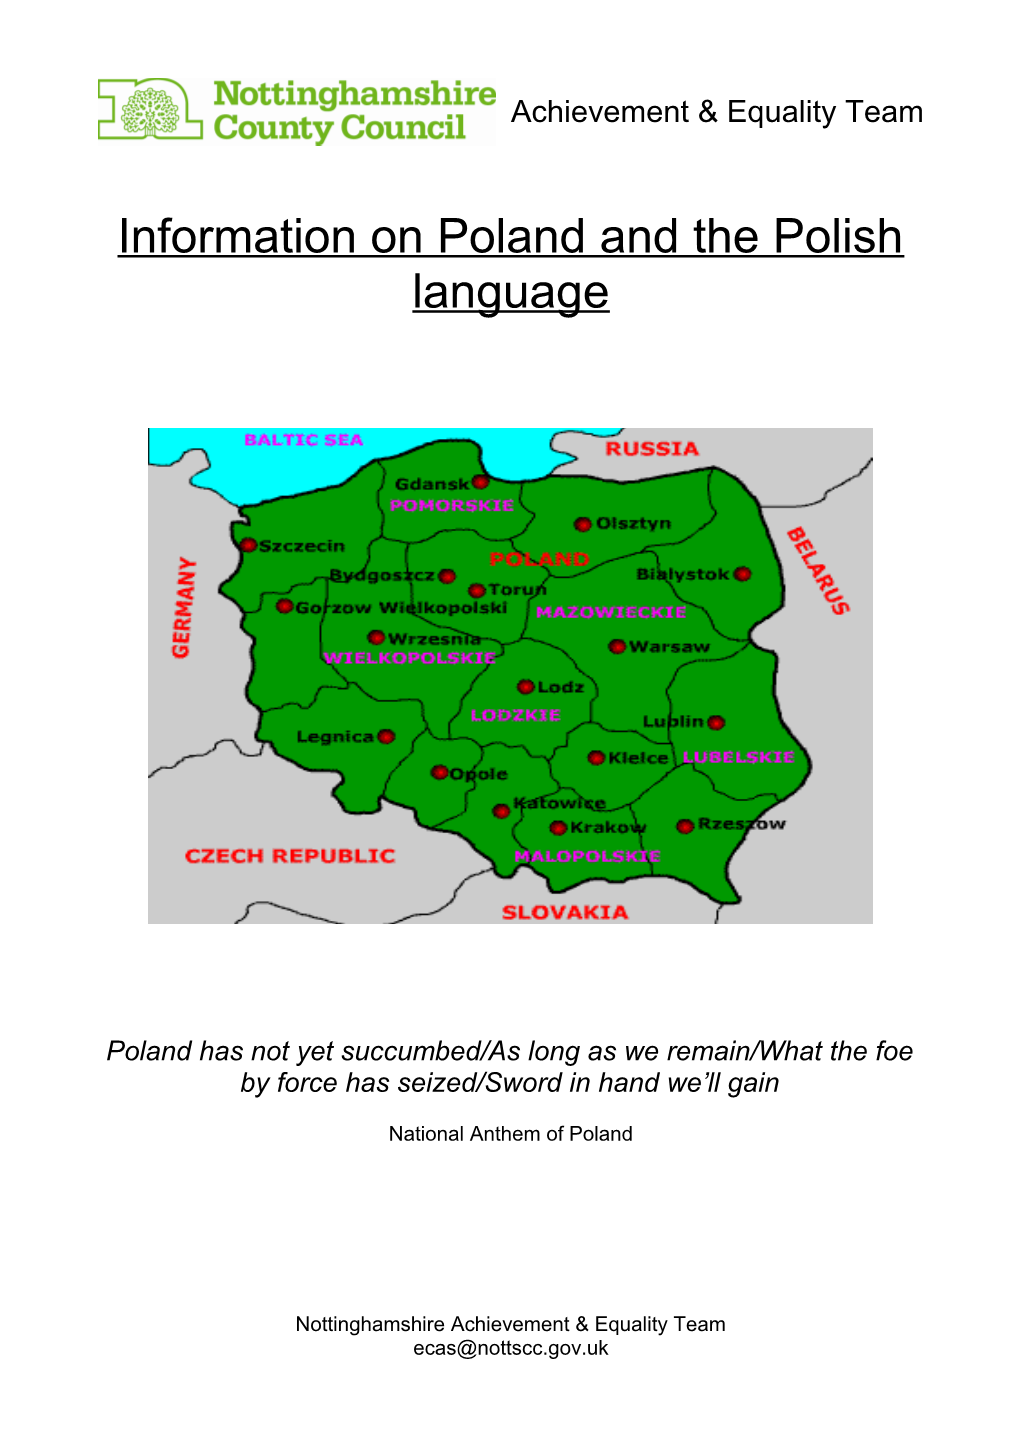 Information on Poland and the Polish Language